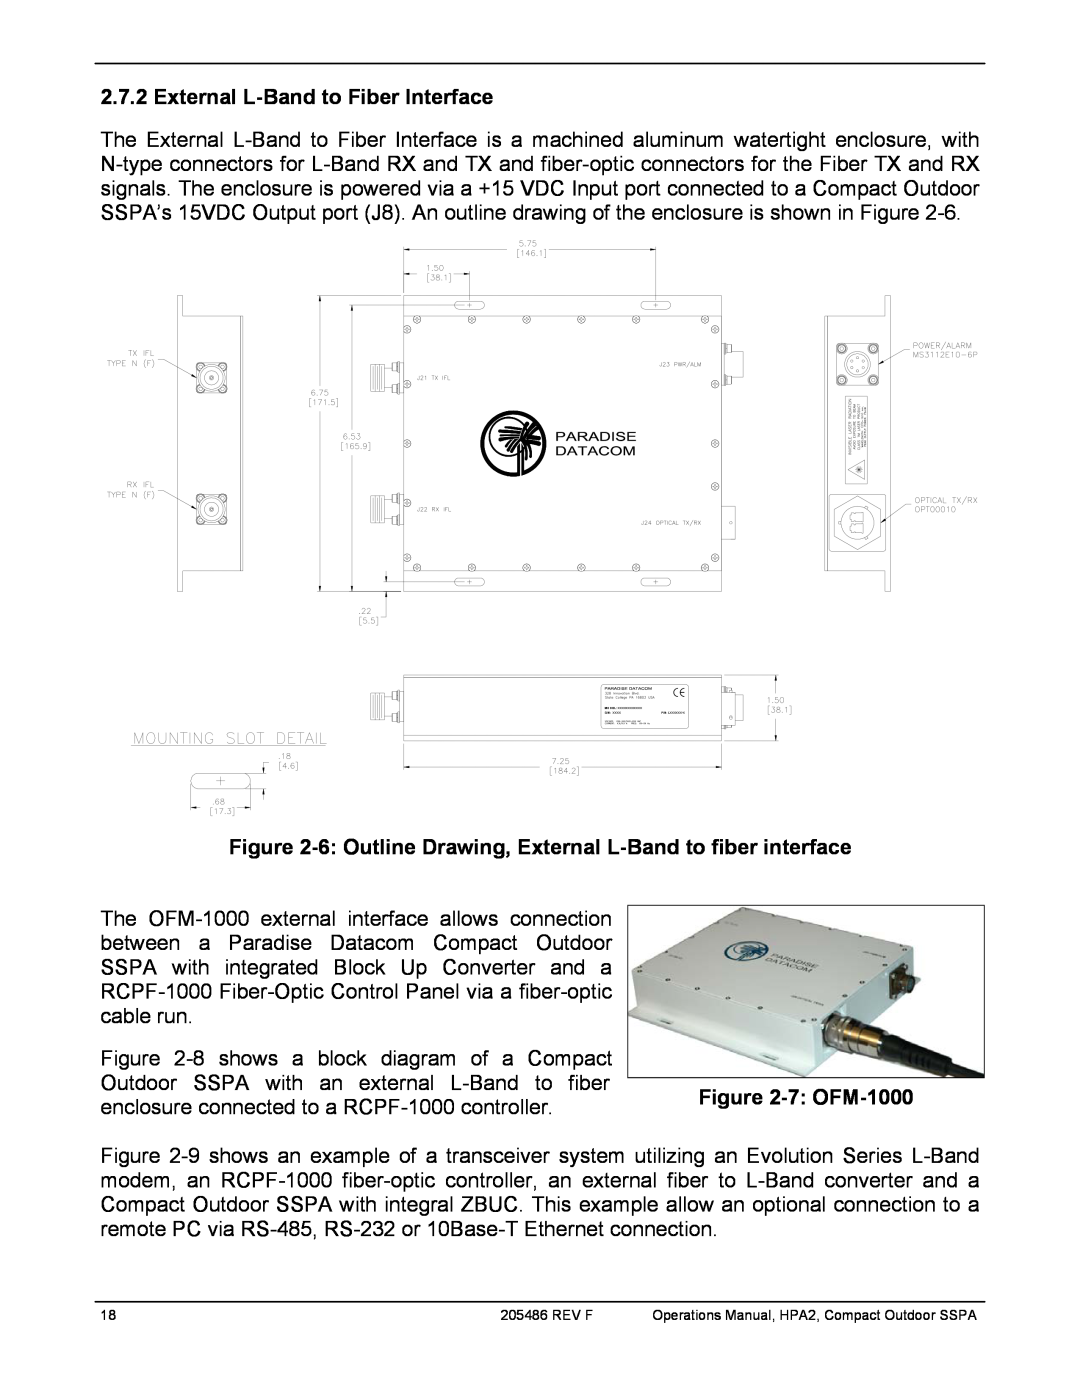 Paradise 205486 REV F manual External L-Bandto Fiber Interface, 7: OFM-1000 